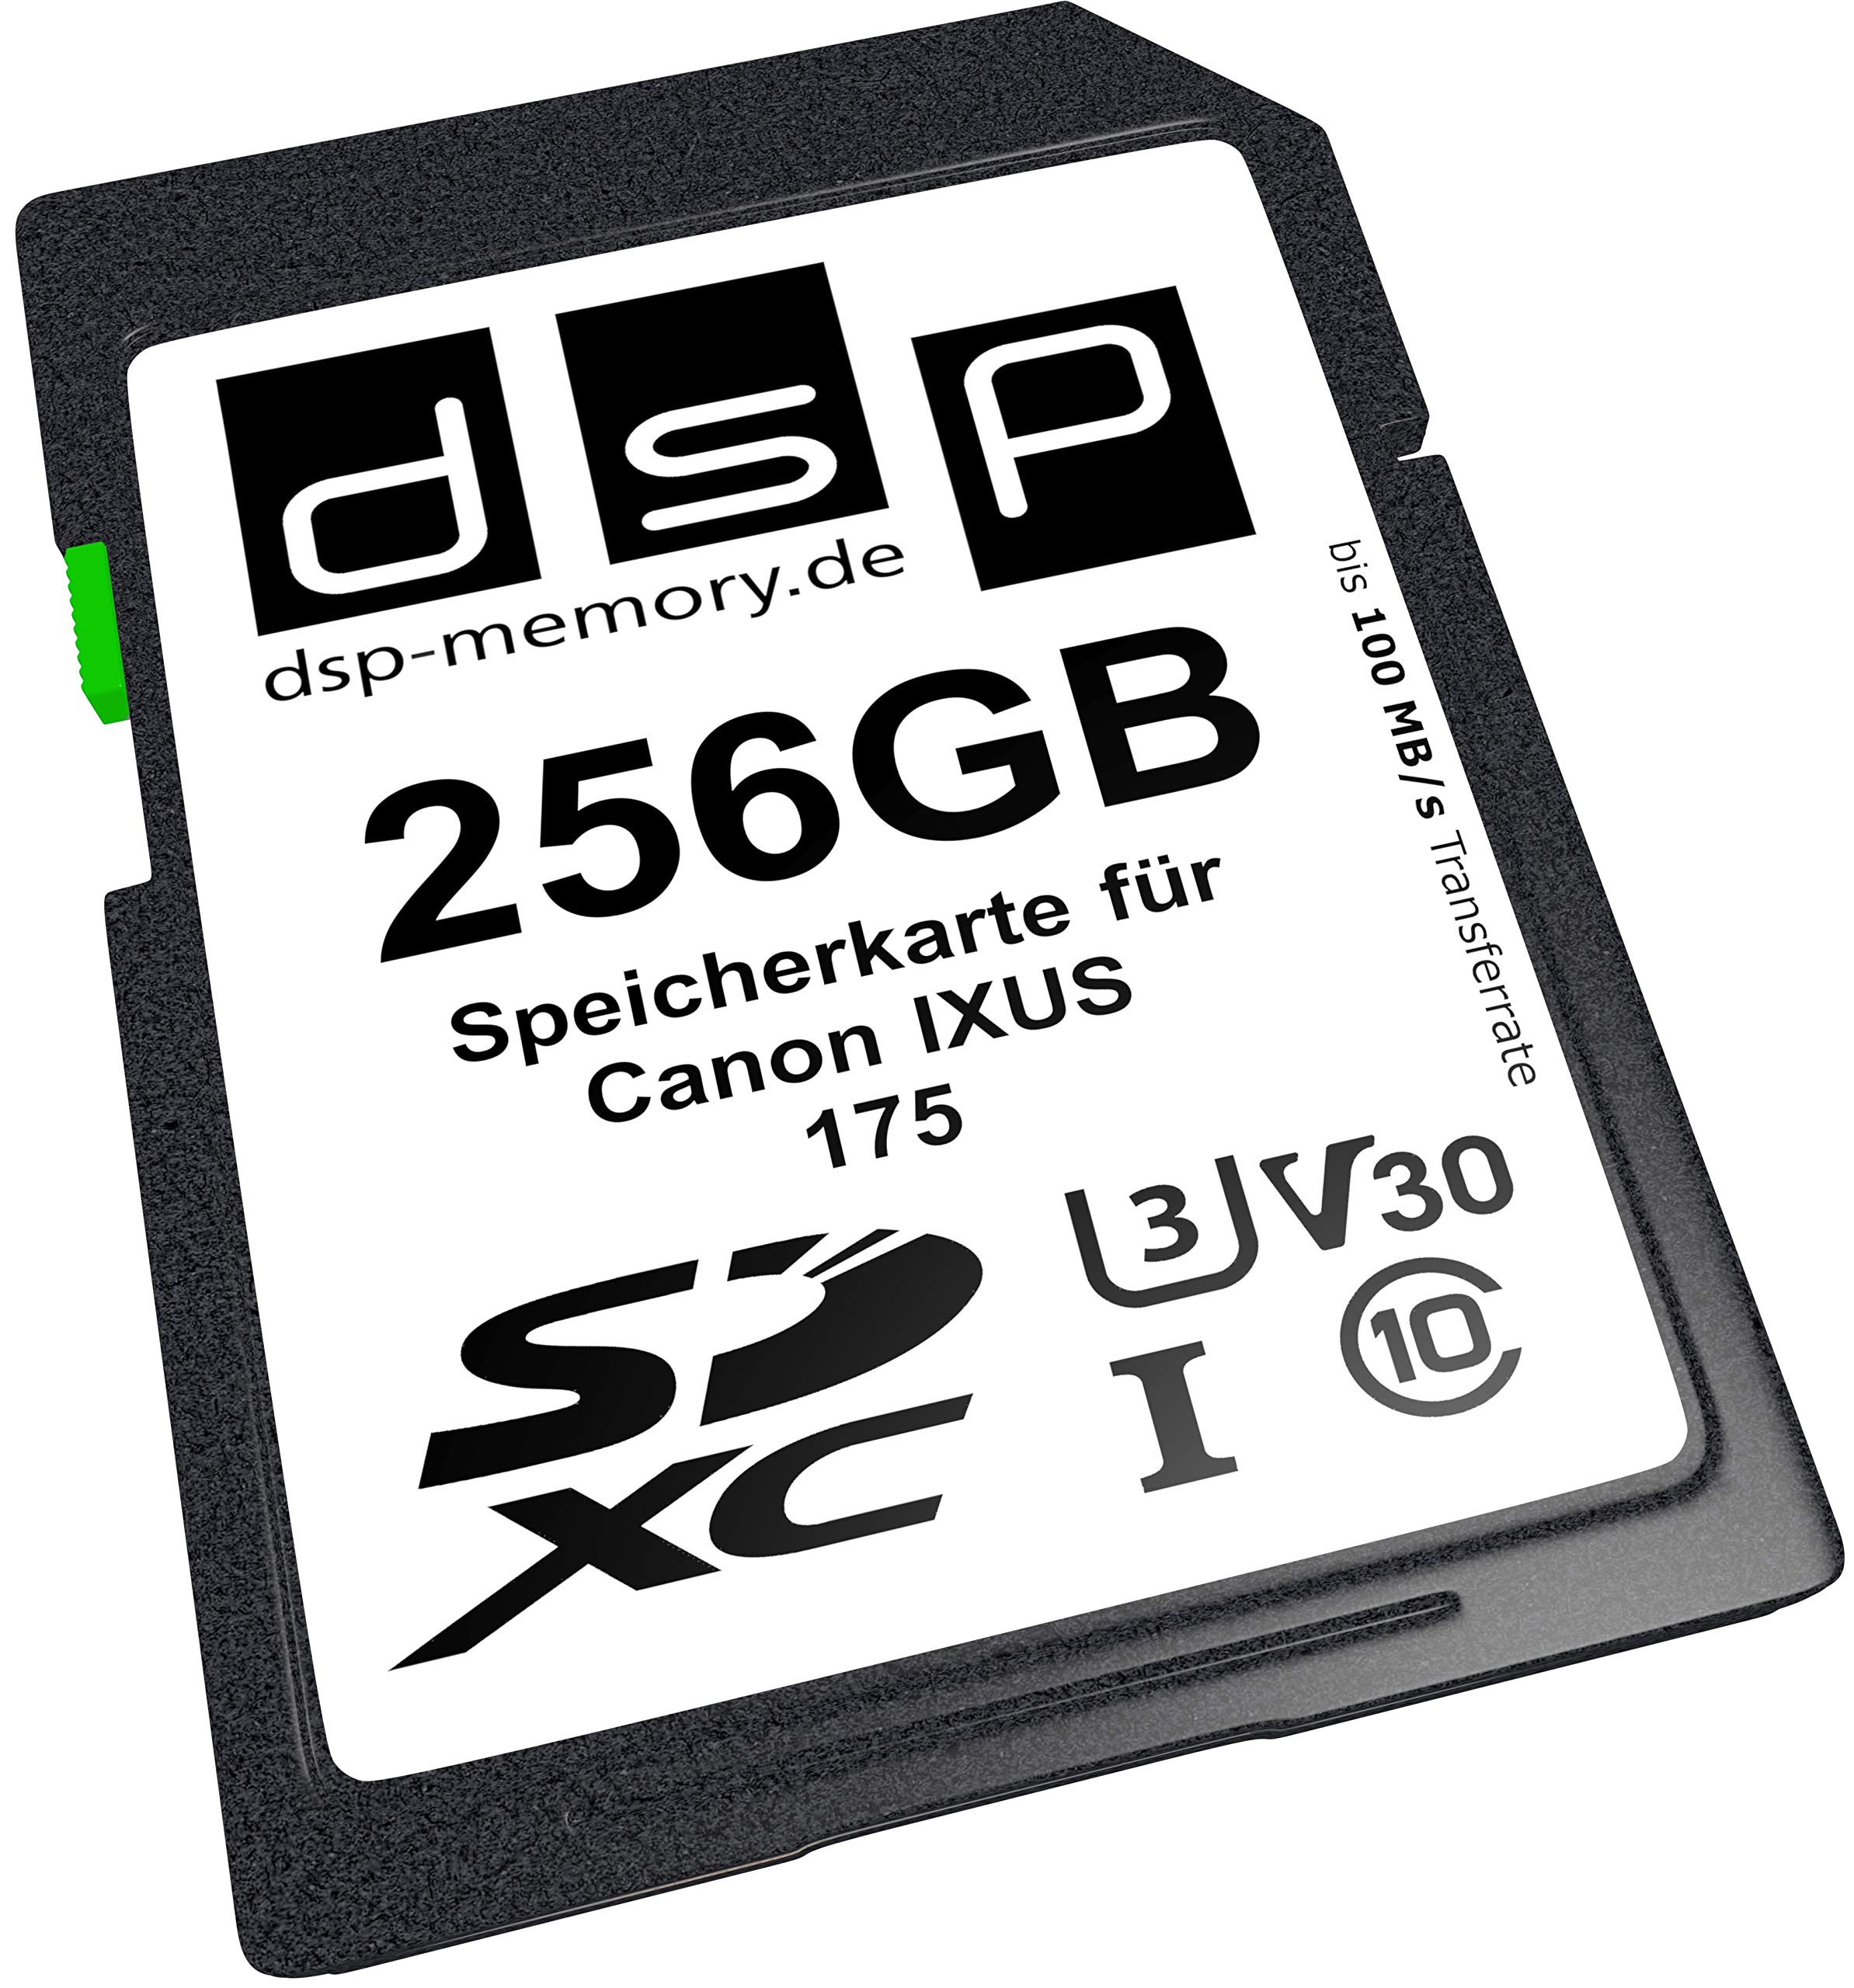 DSP Memory 256GB Professional V30 Speicherkarte für Canon IXUS 175 Digitalkamera